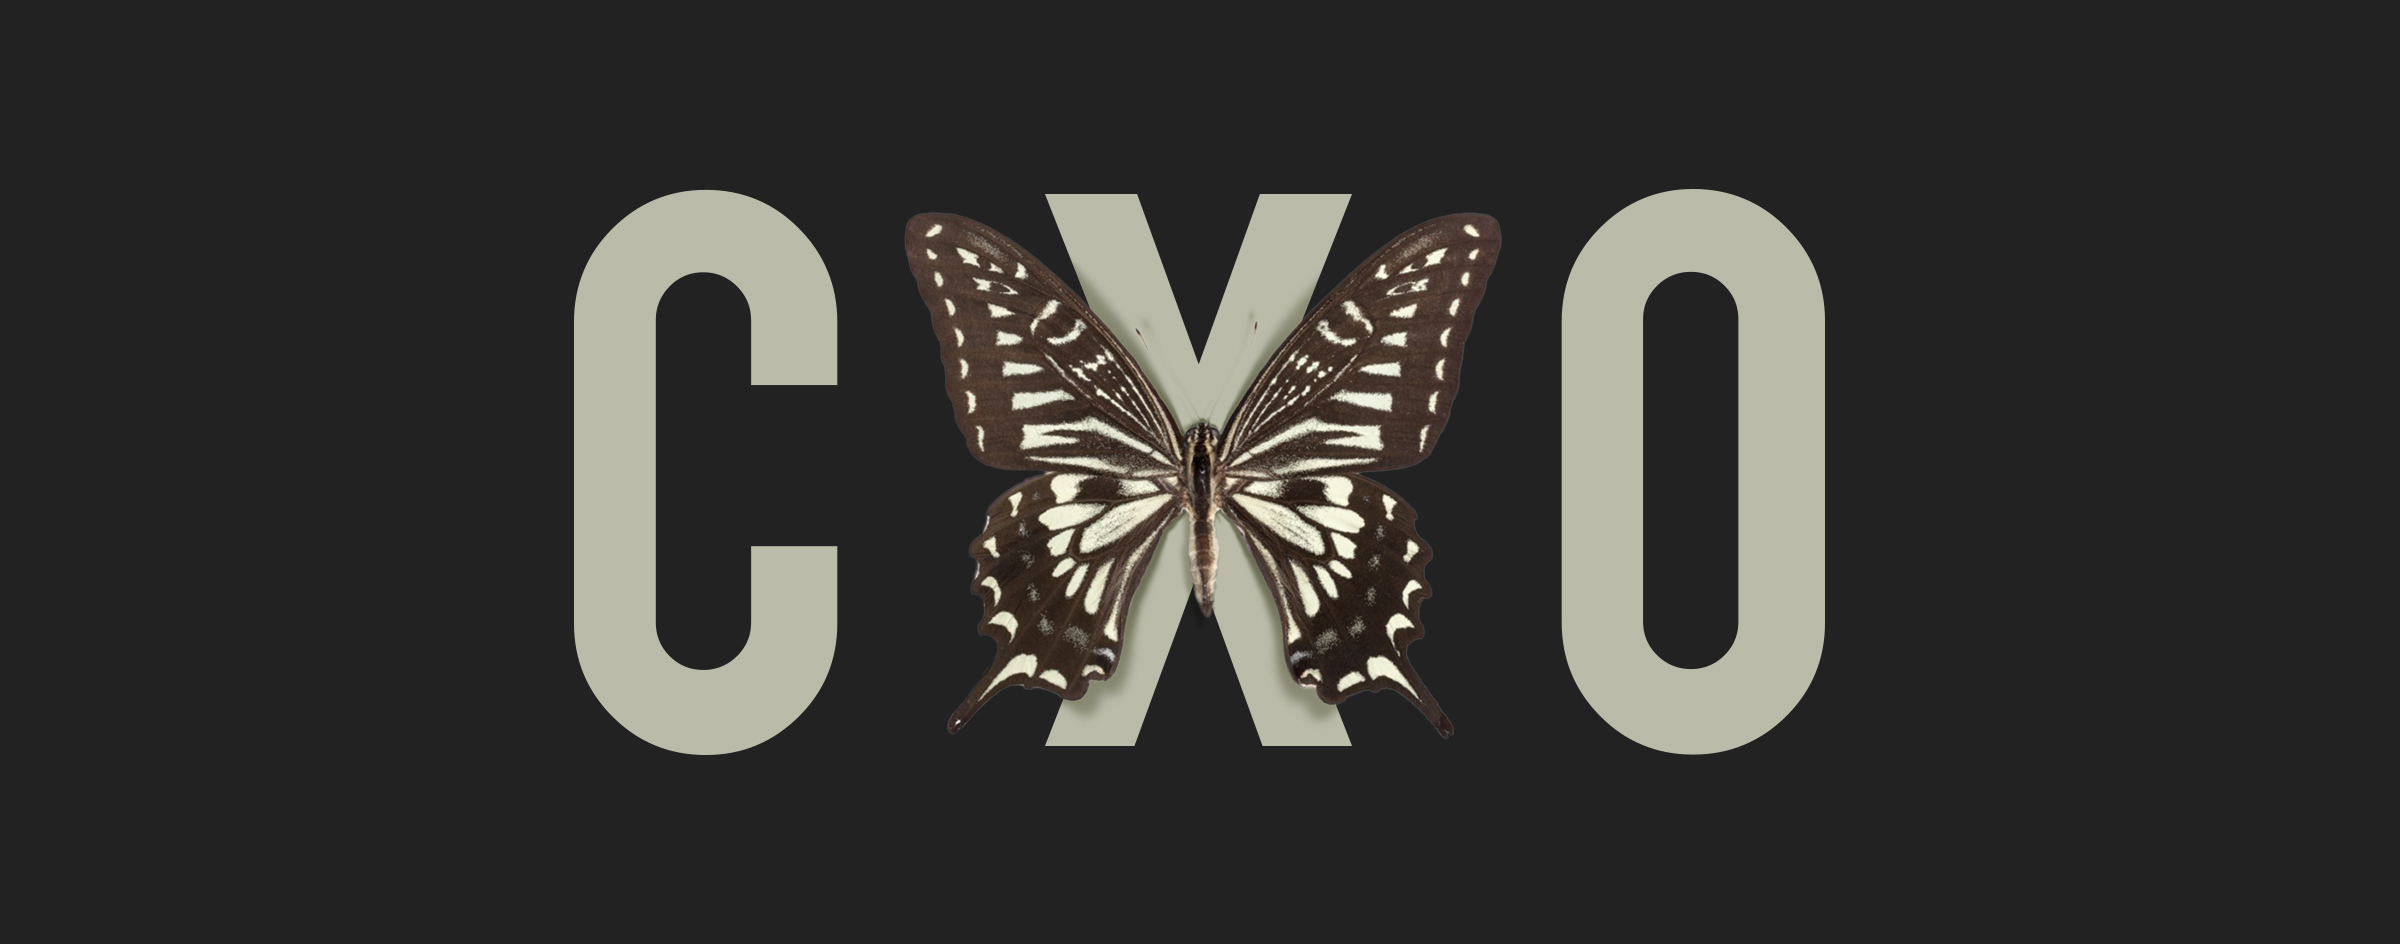 Metamorphosis: From CMO to CXO